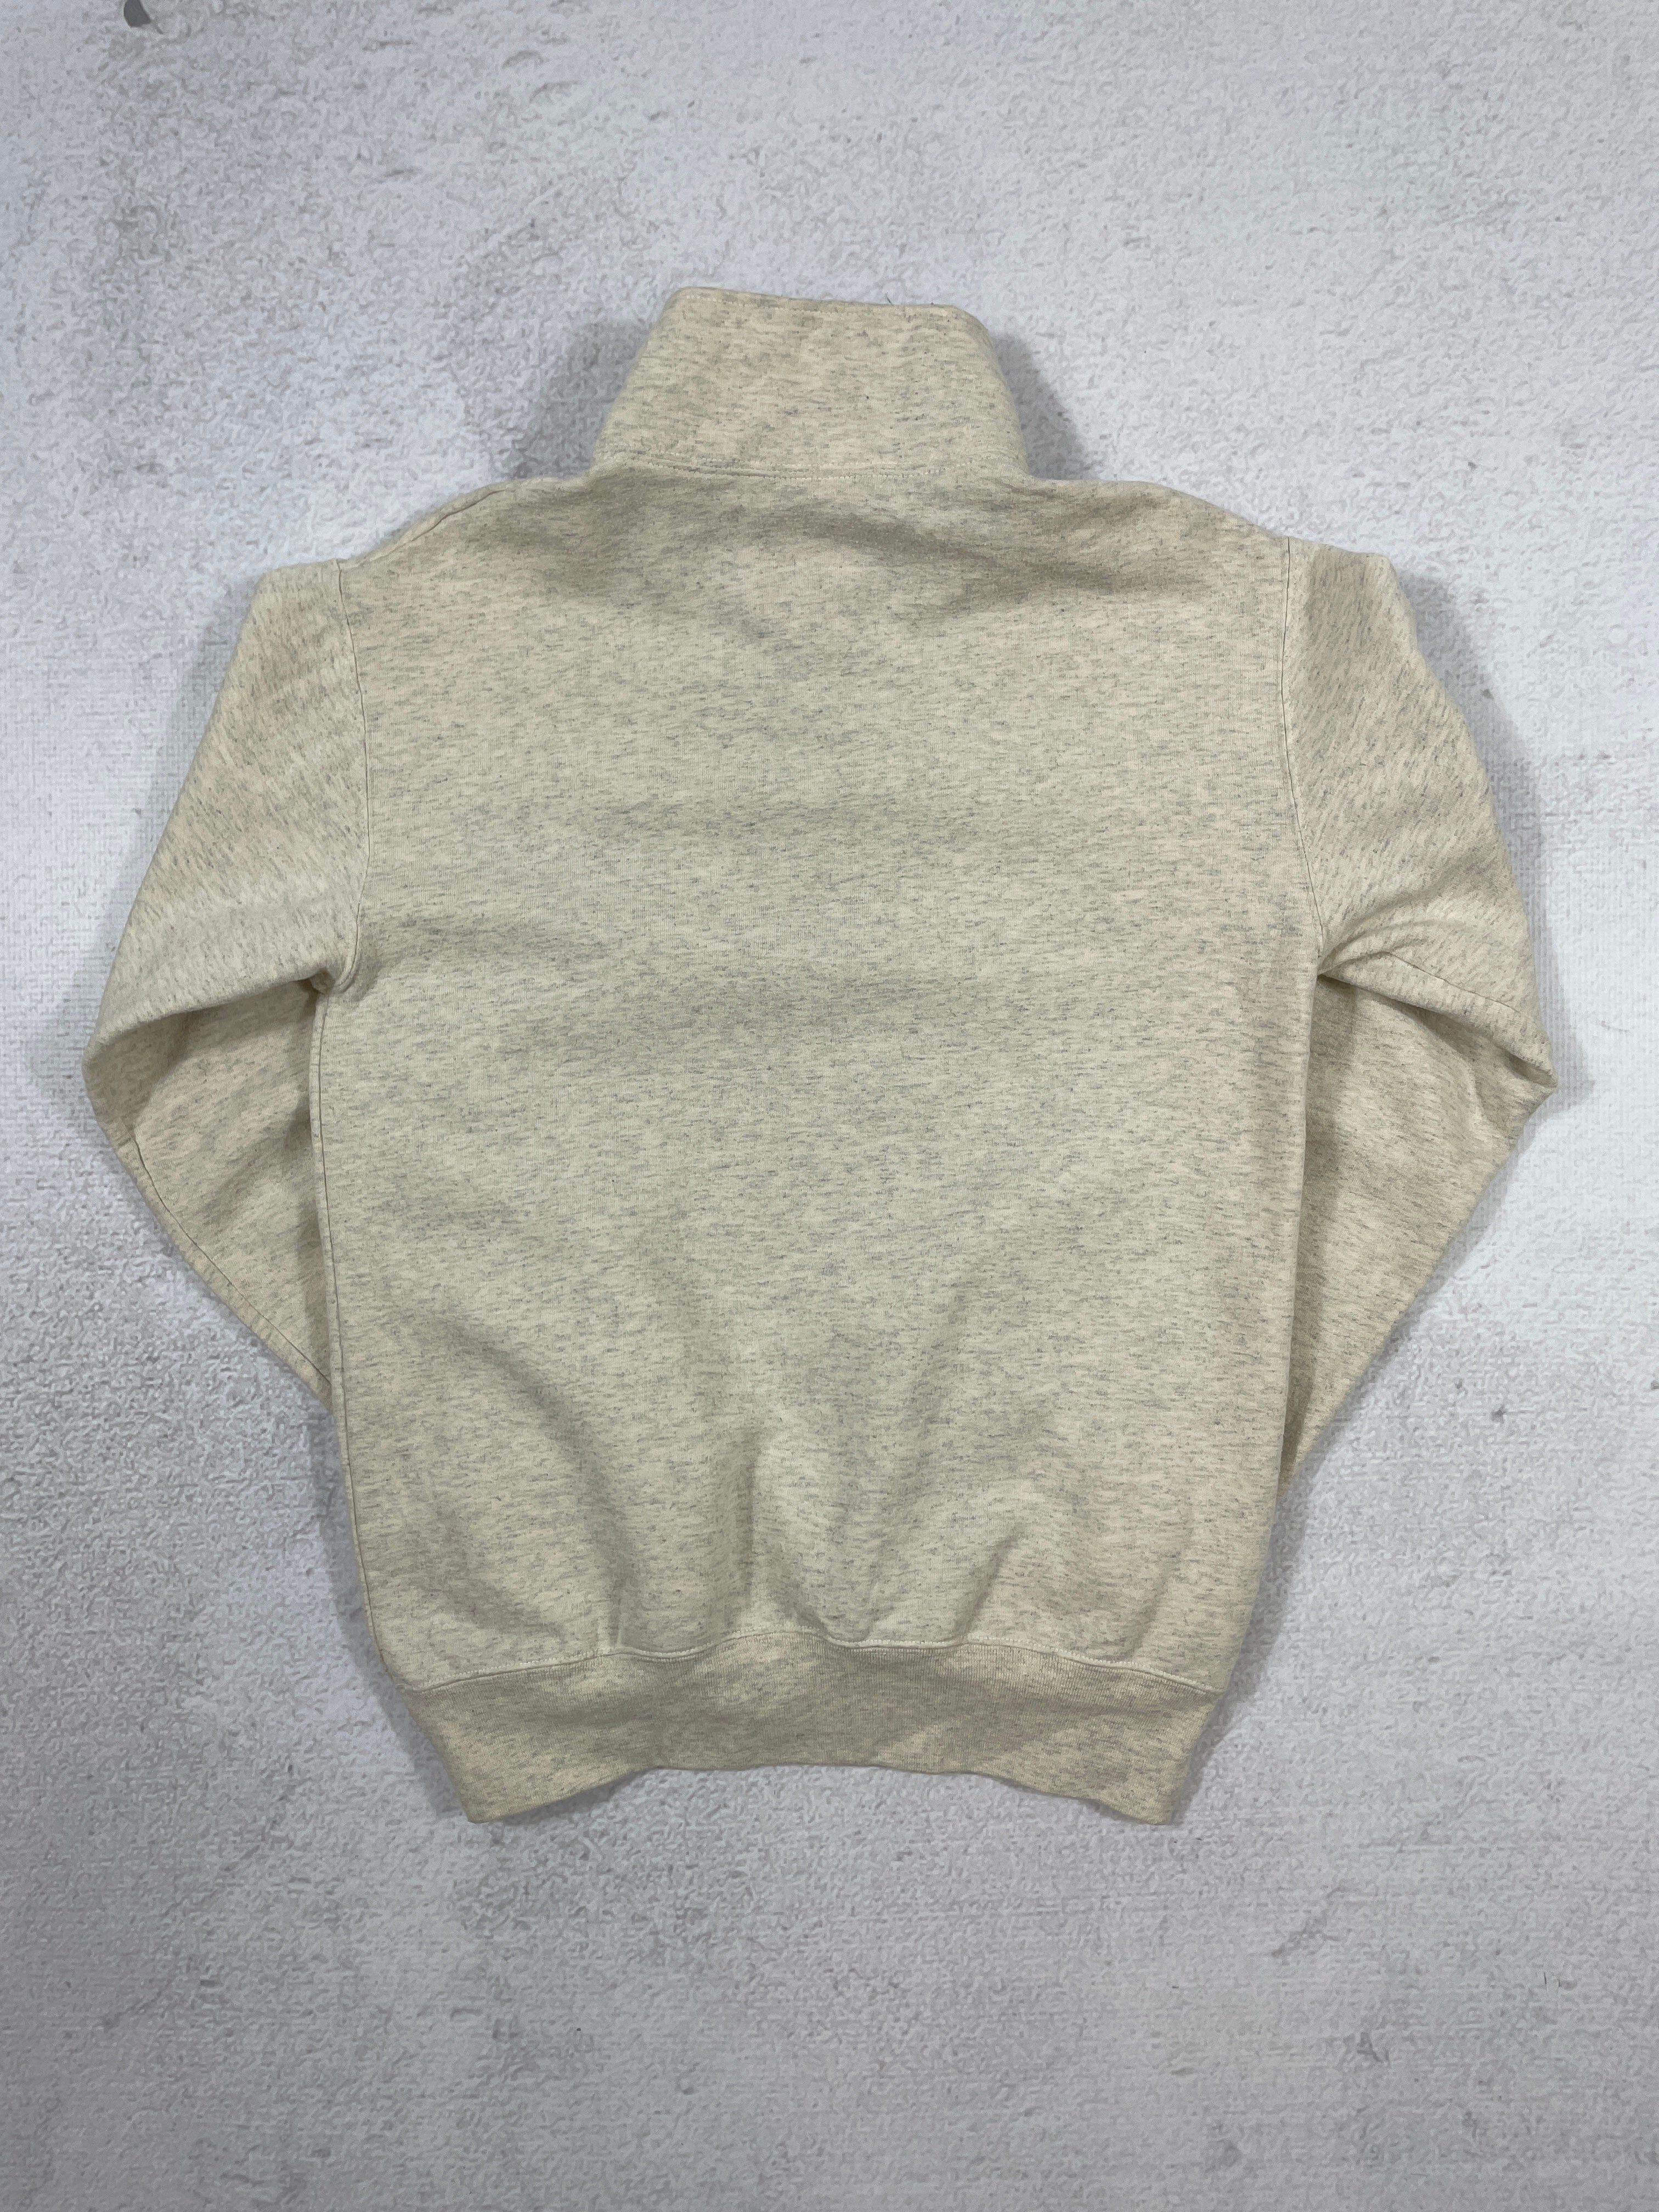 Vintage Champion PLNU 1/4 Zip Sweatshirt - Men's Small